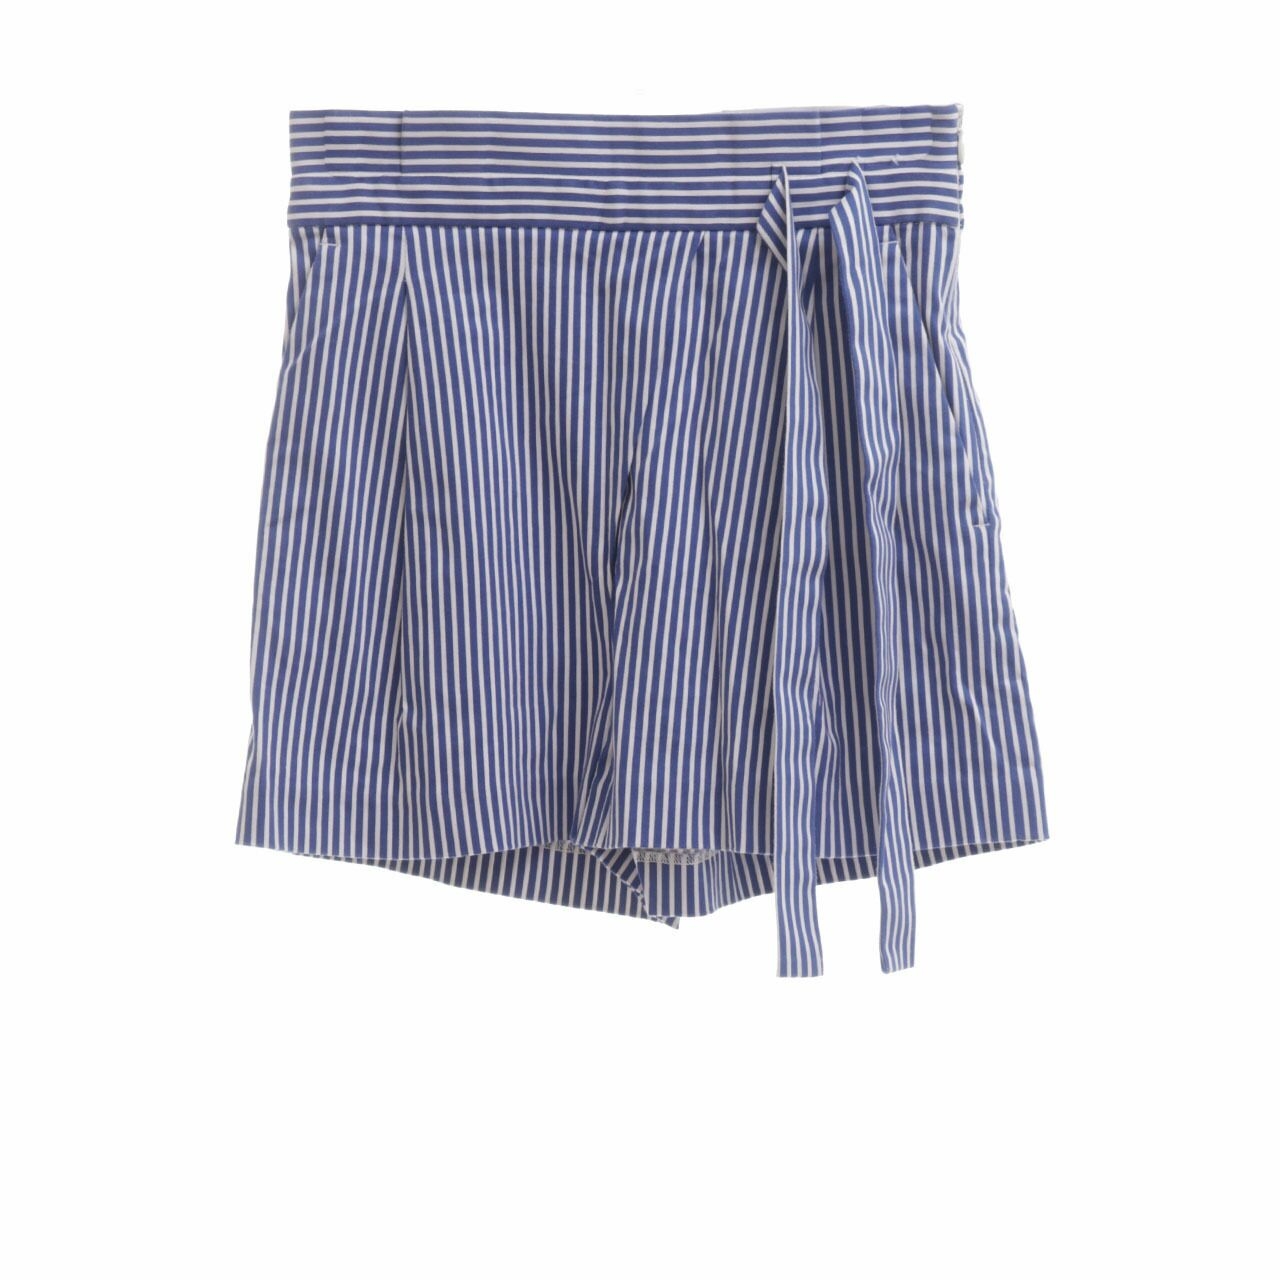 Jaspal Blue & White Stripes Shorts Pants 